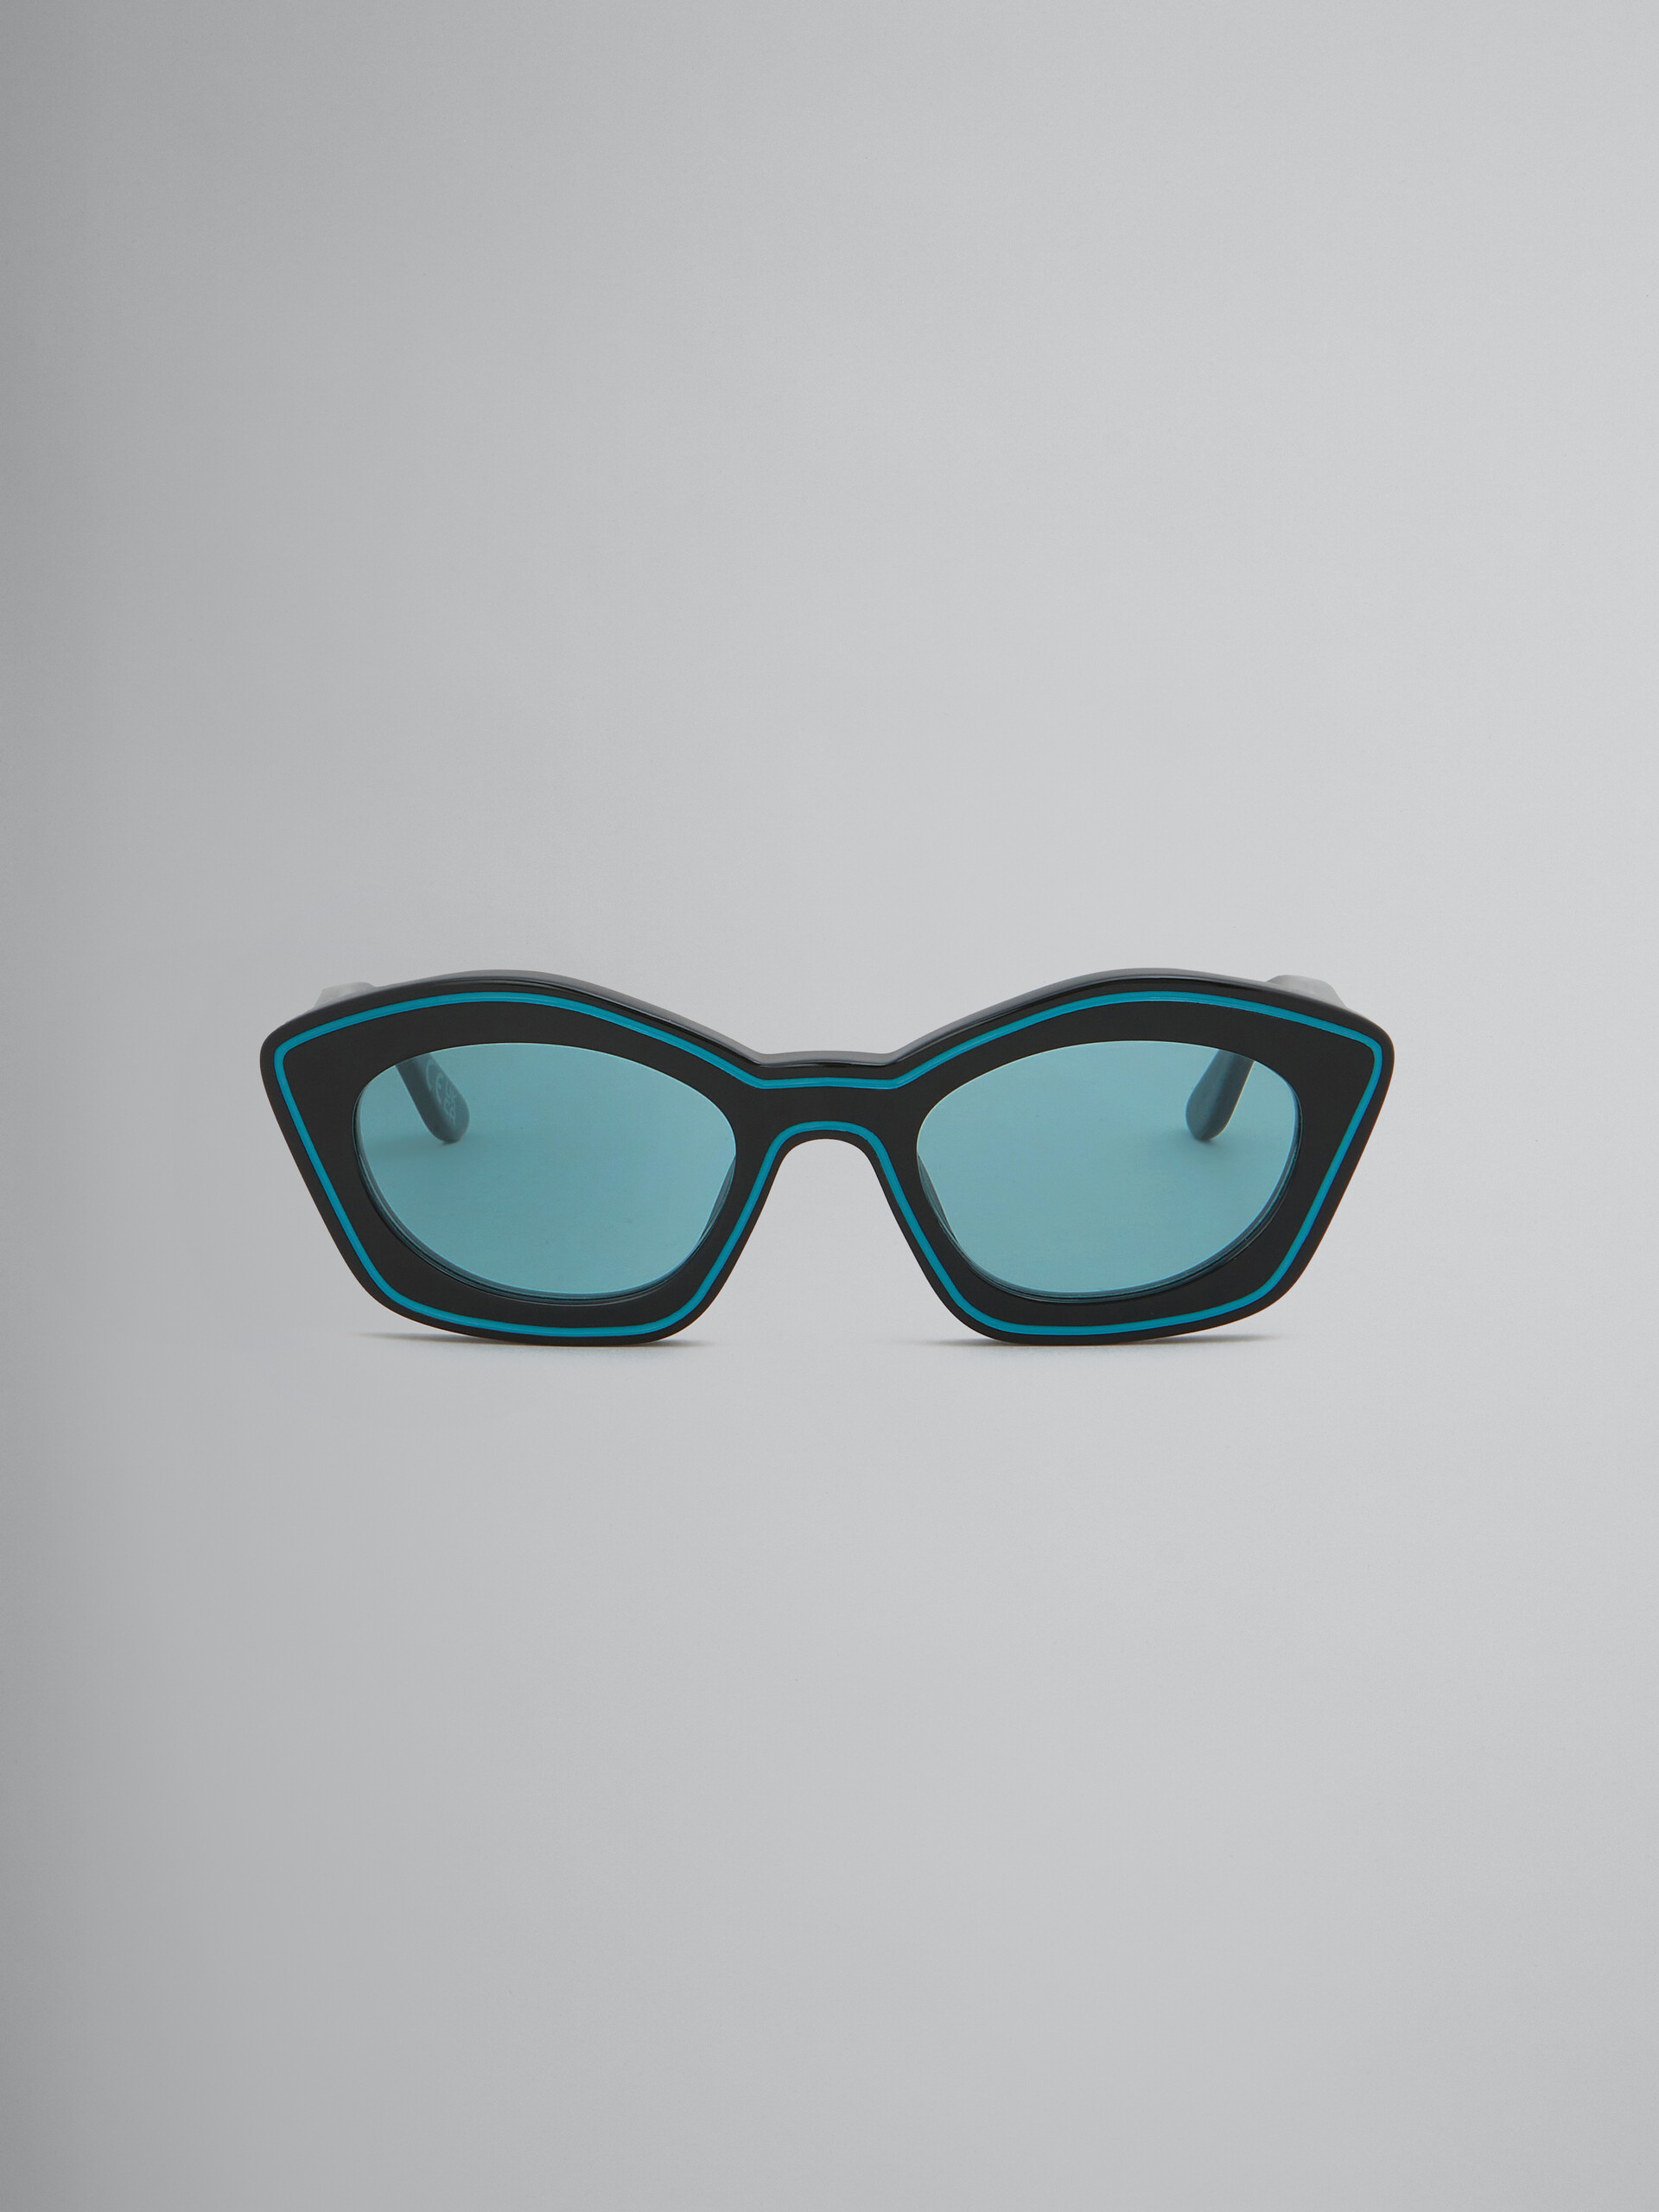 Blaugrüne Sonnenbrille Kea Island - Optisch - Image 1